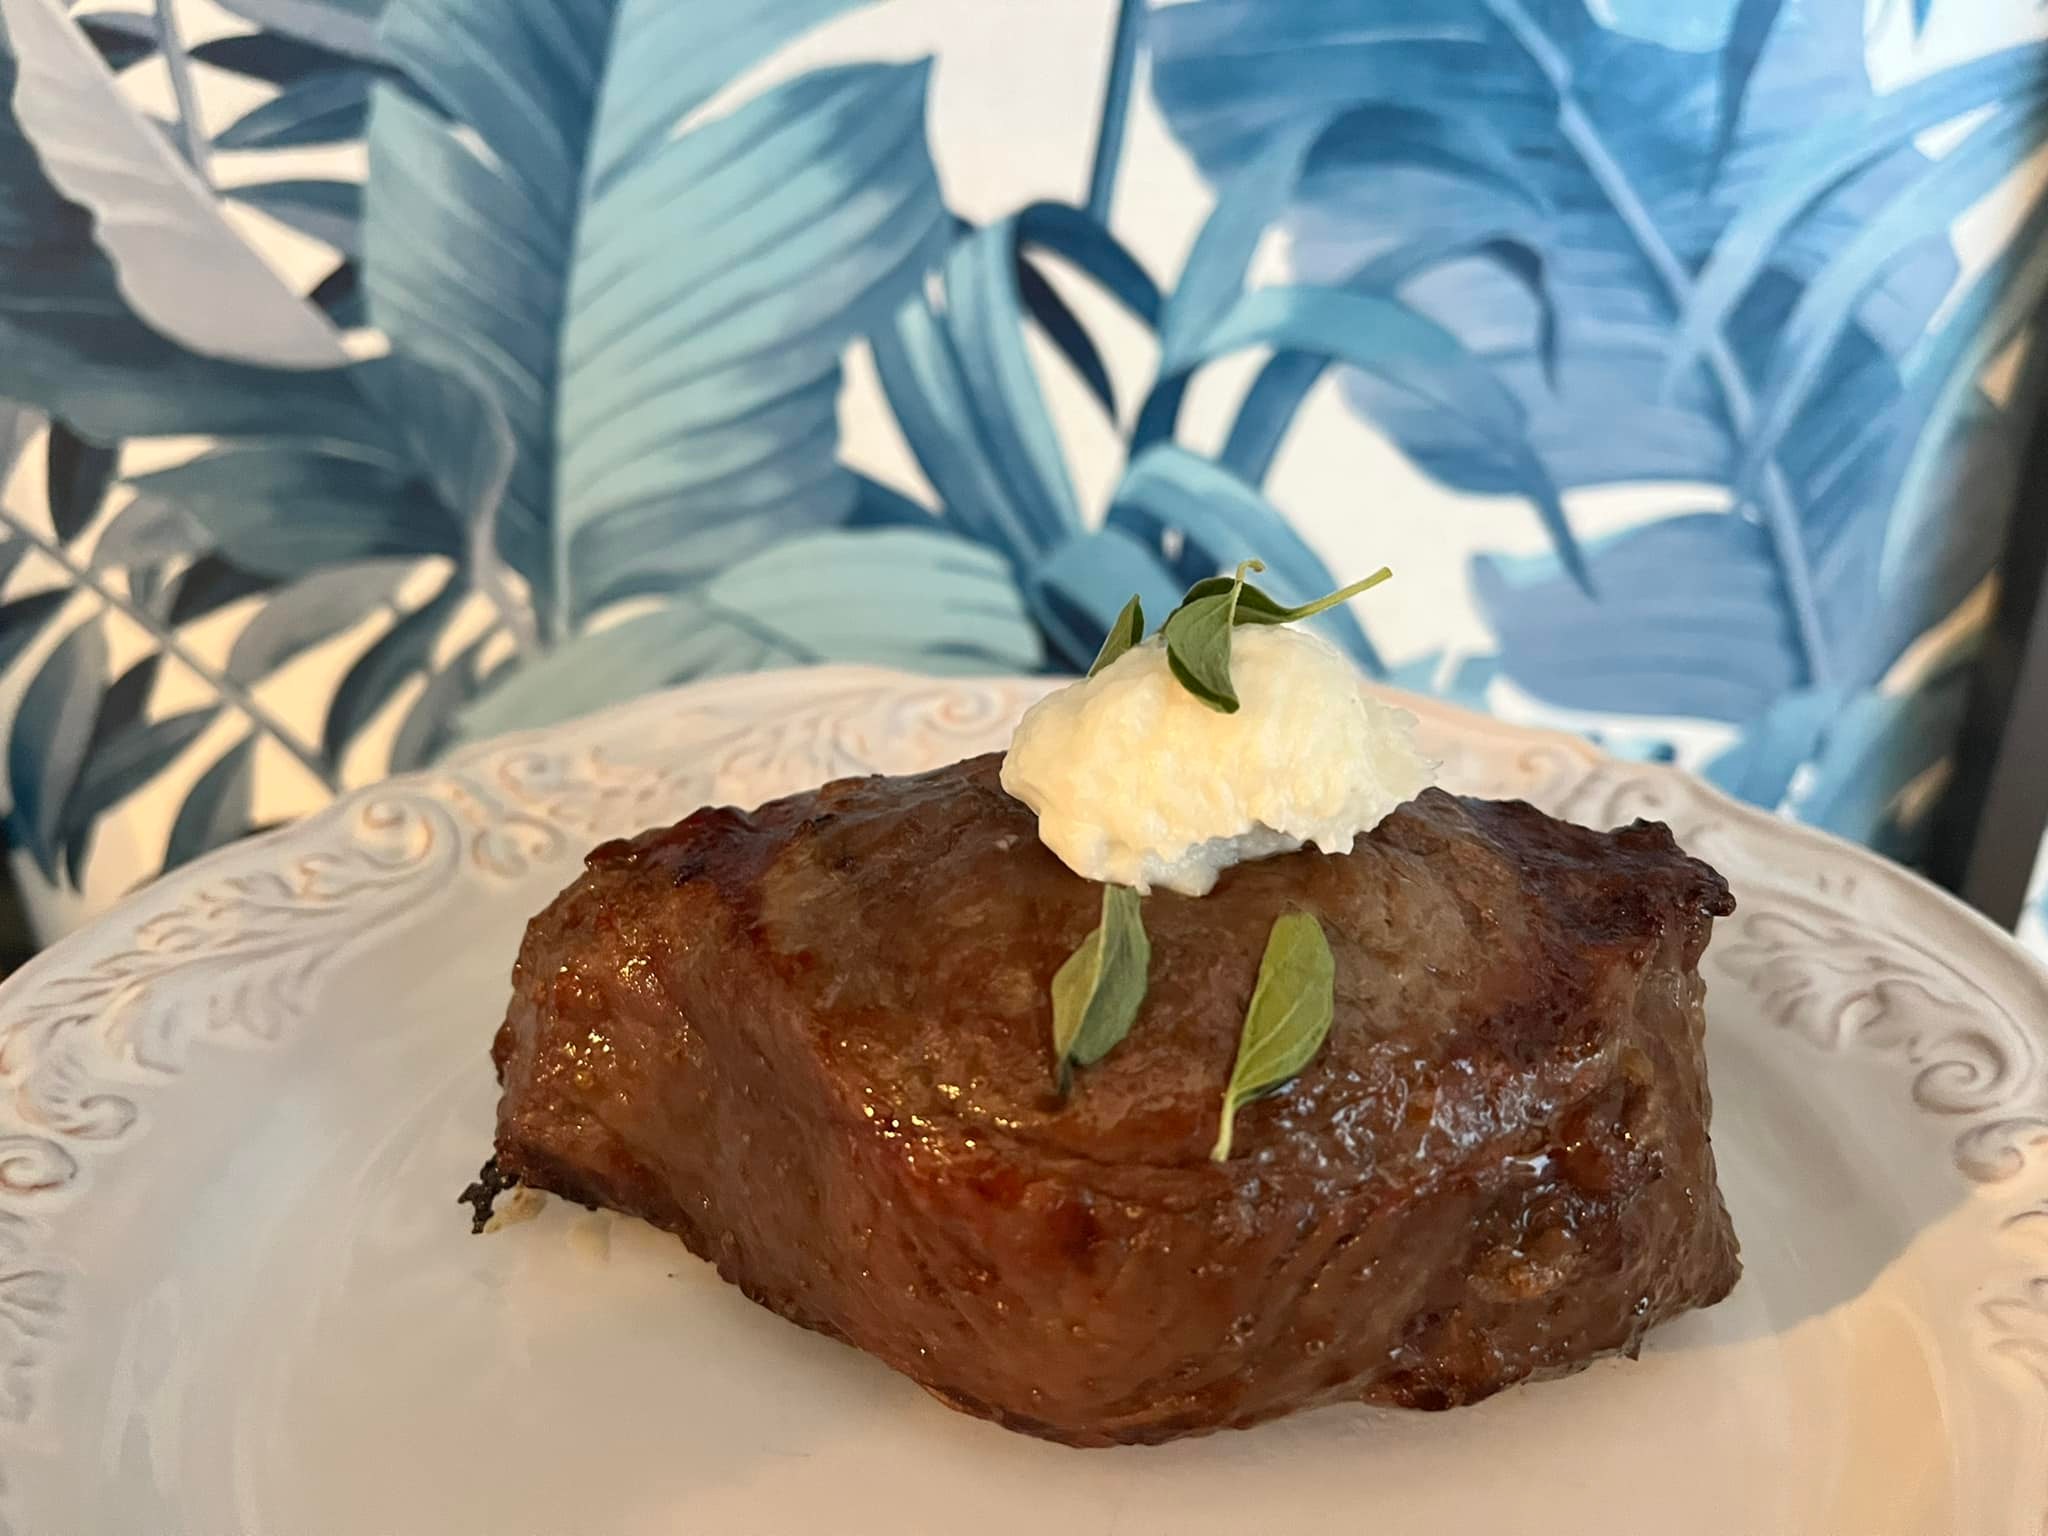 Air Fryer steak recipe tested by Food Network